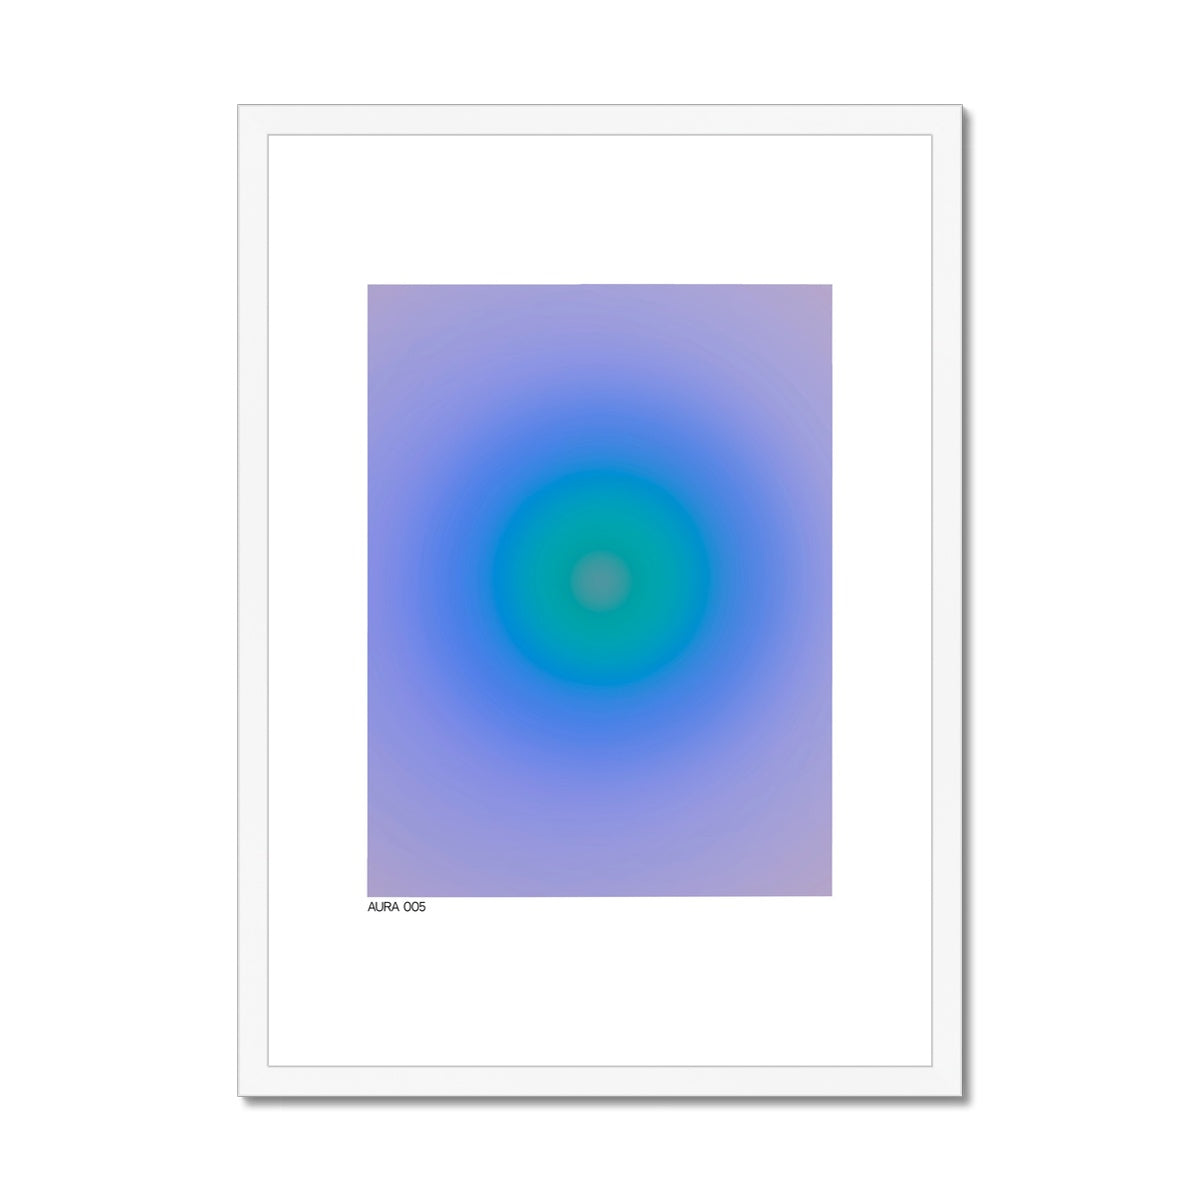 aura 005 Framed & Mounted Print